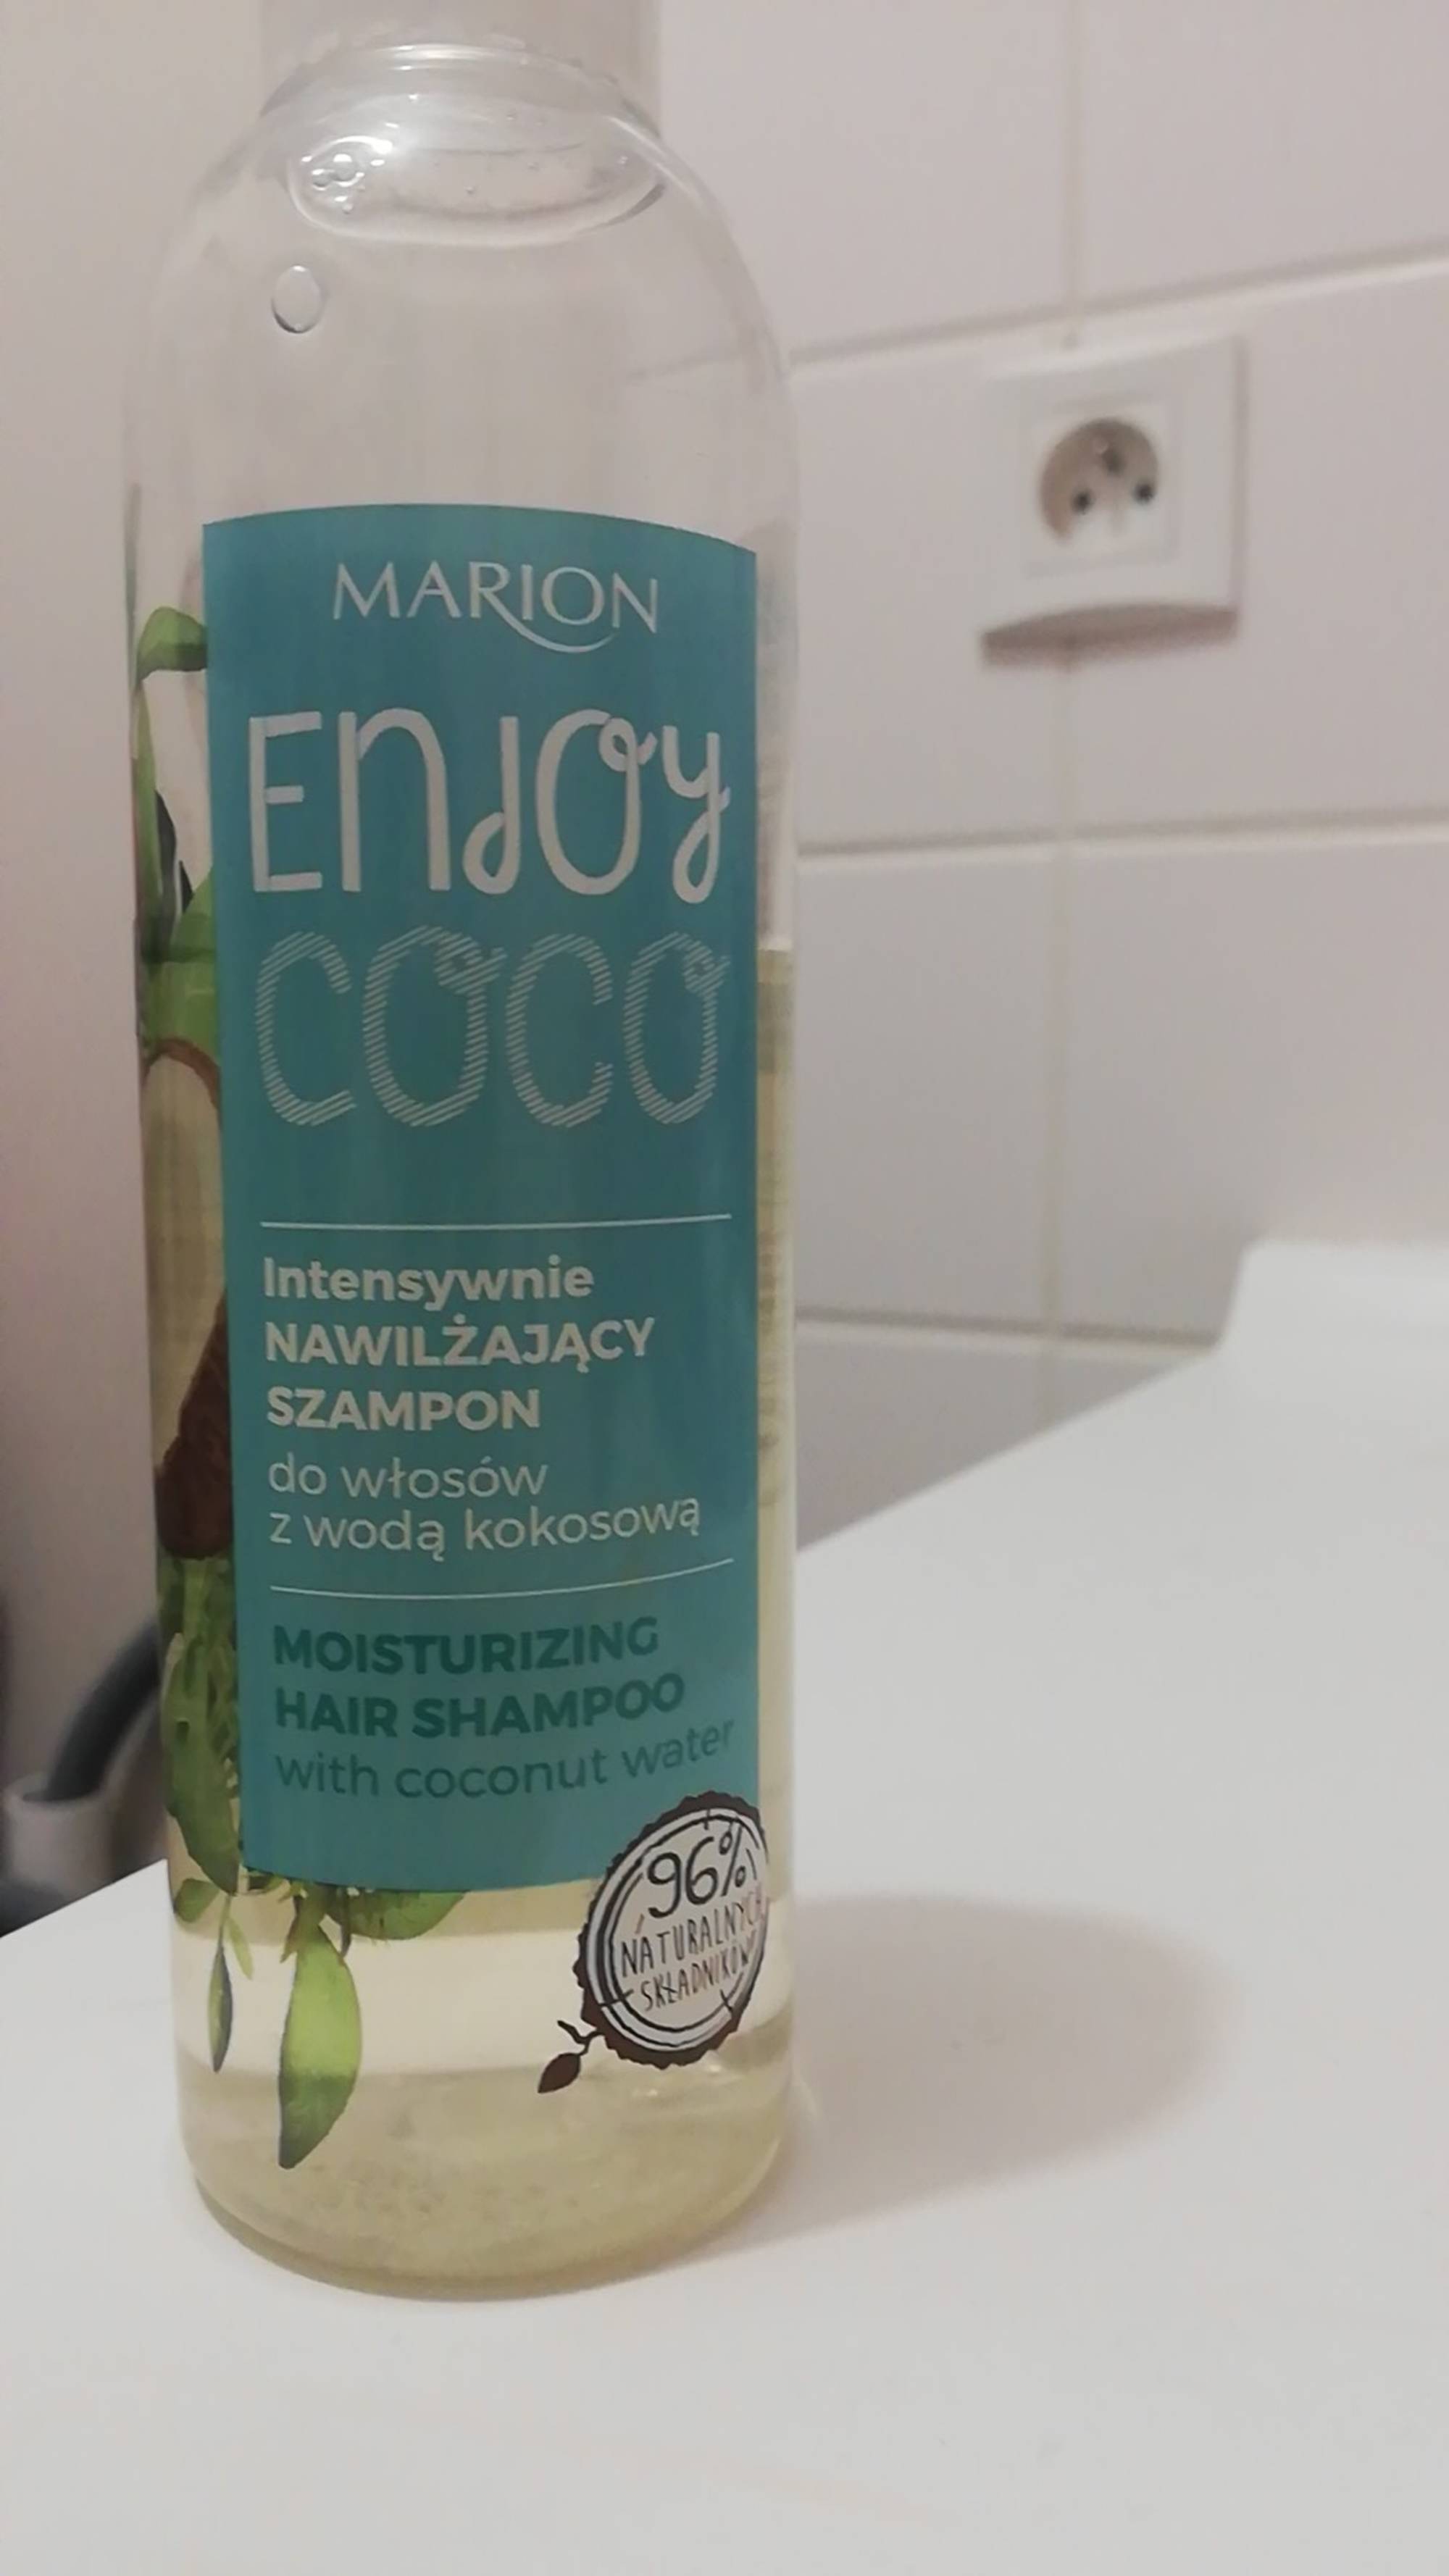 MARION - Enjoy coco - Moisturizing hair shampoo